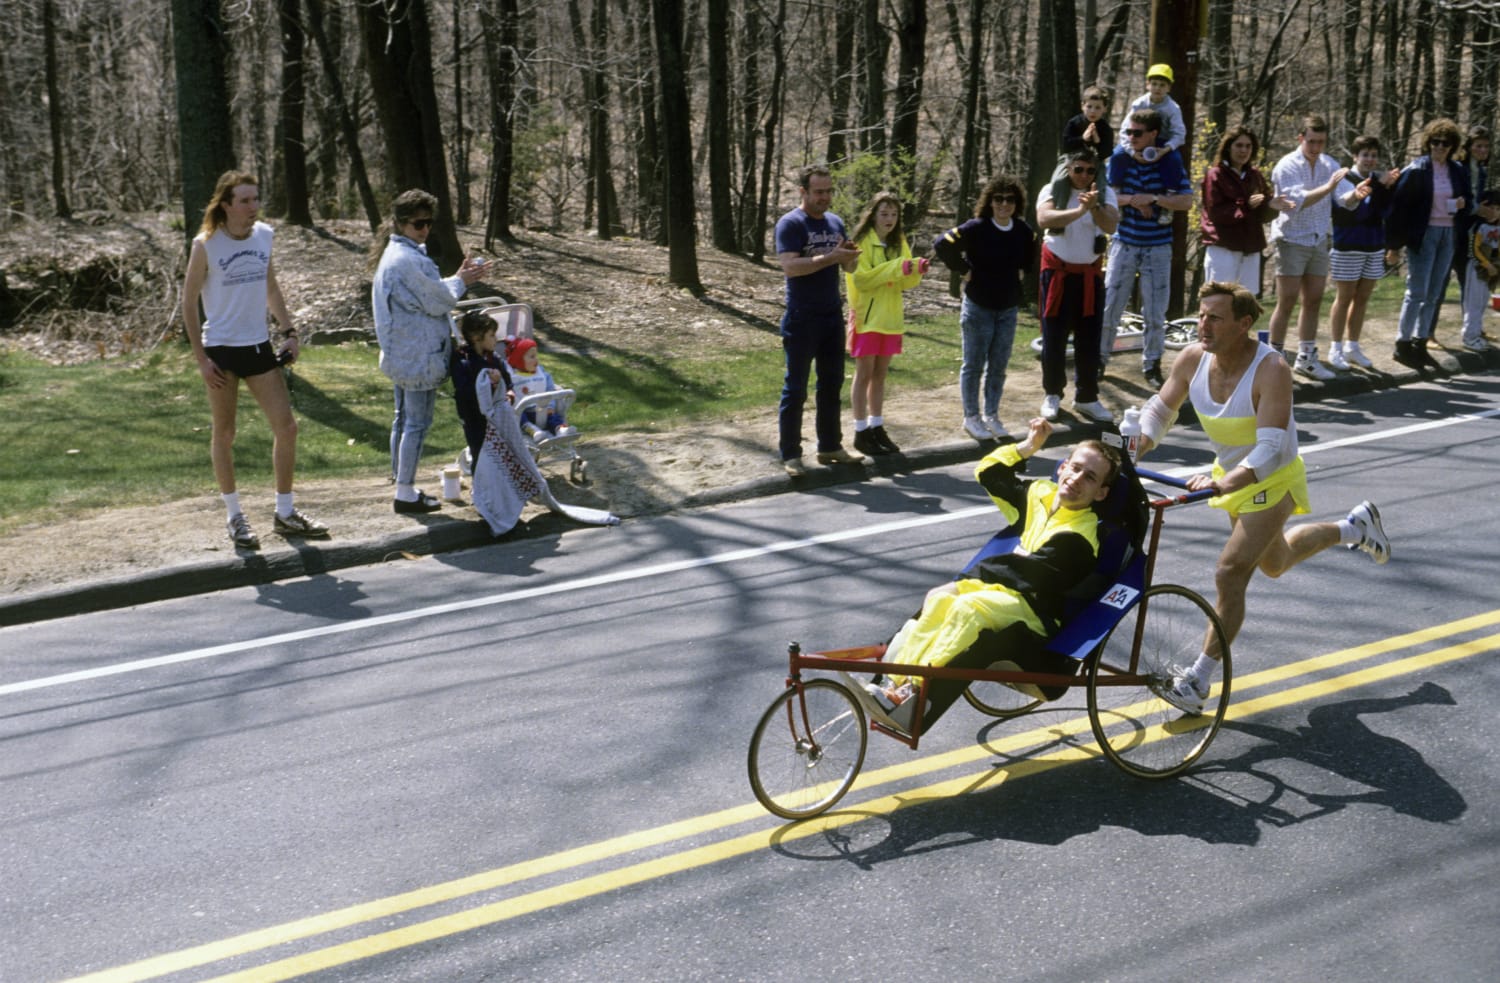 Rick Hoyt, a Boston Marathon Fixture With Father Pushing Wheelchair, Dies